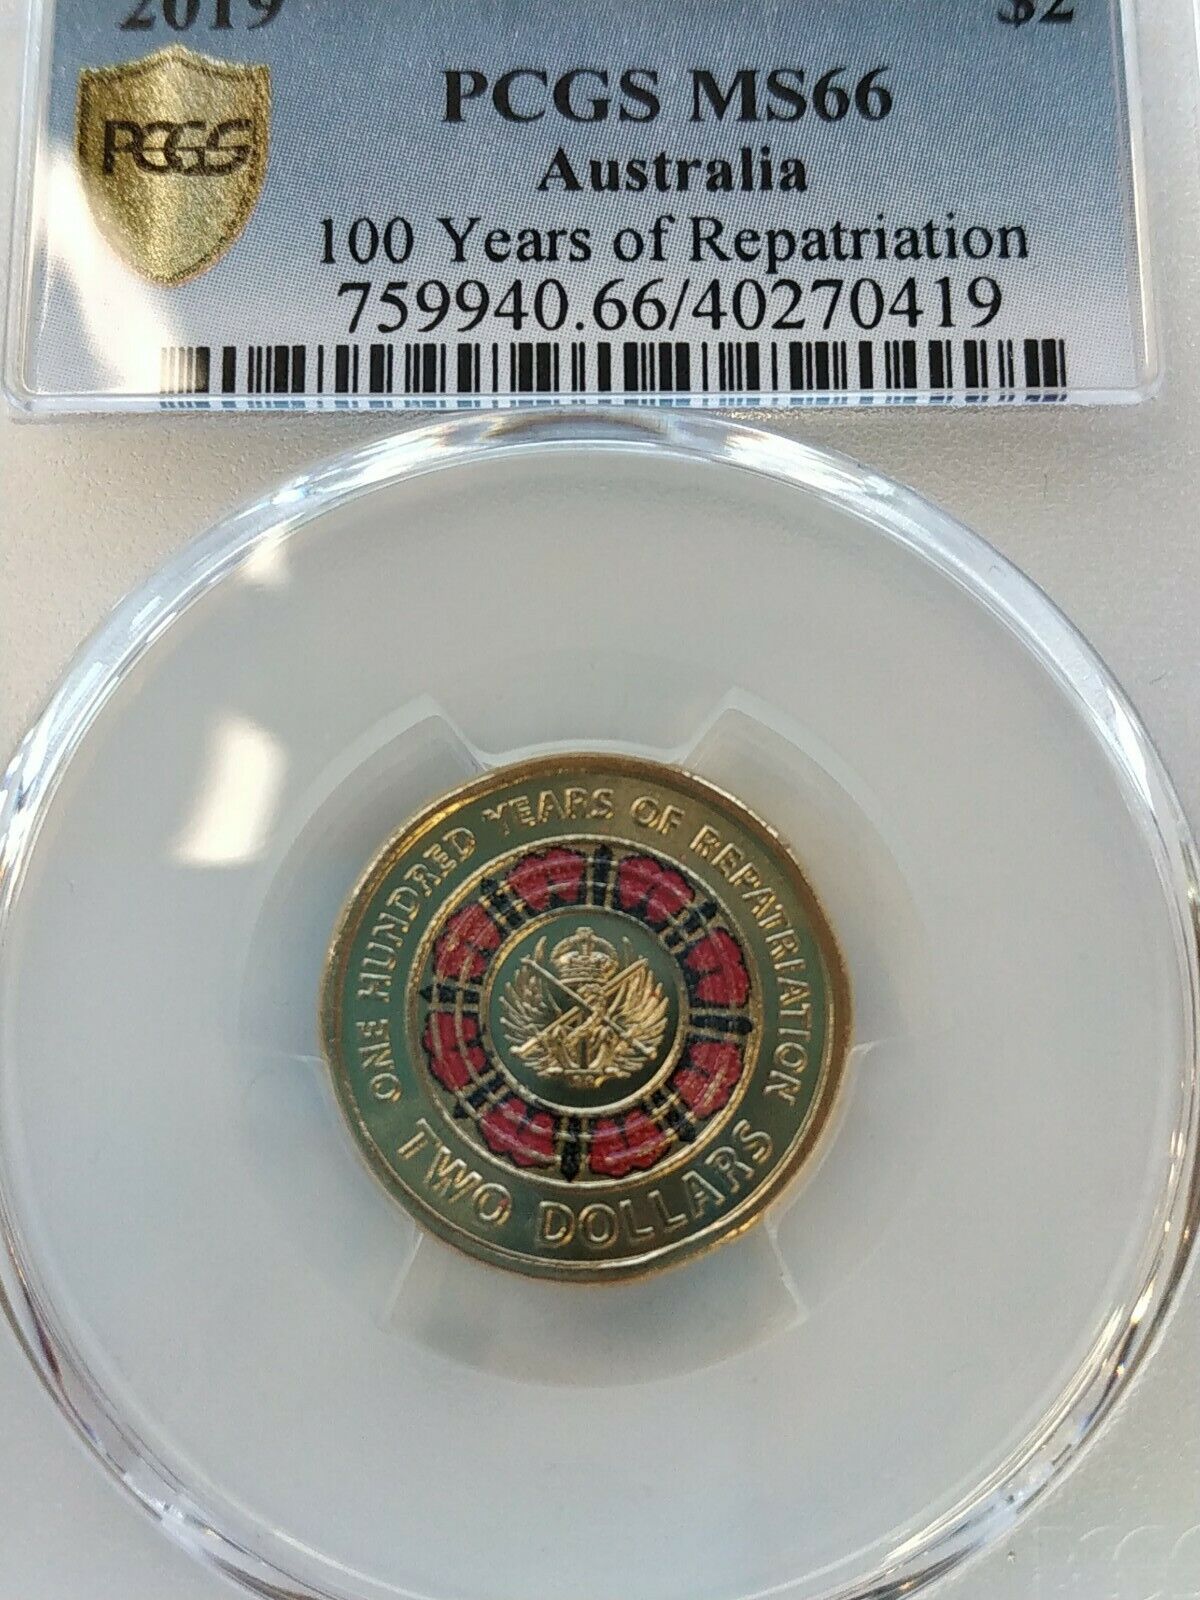 Royal Australian Mint 2019 $2 100 Years of Repatriation PCGS MS66